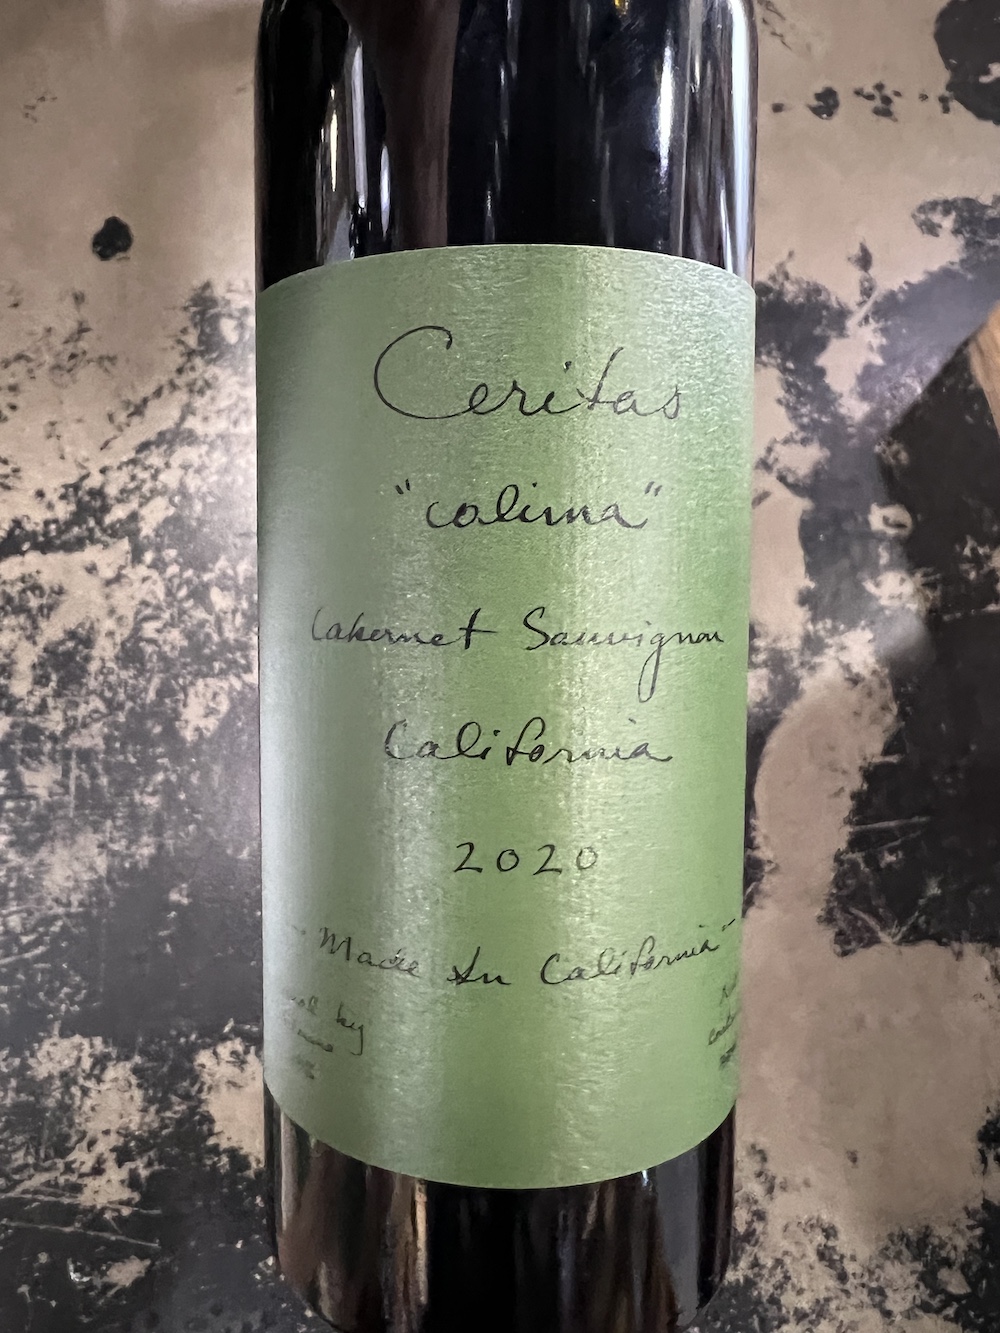 Ceritas - Colima Cabernet Sauvignon 2020 (750ml) (750ml)